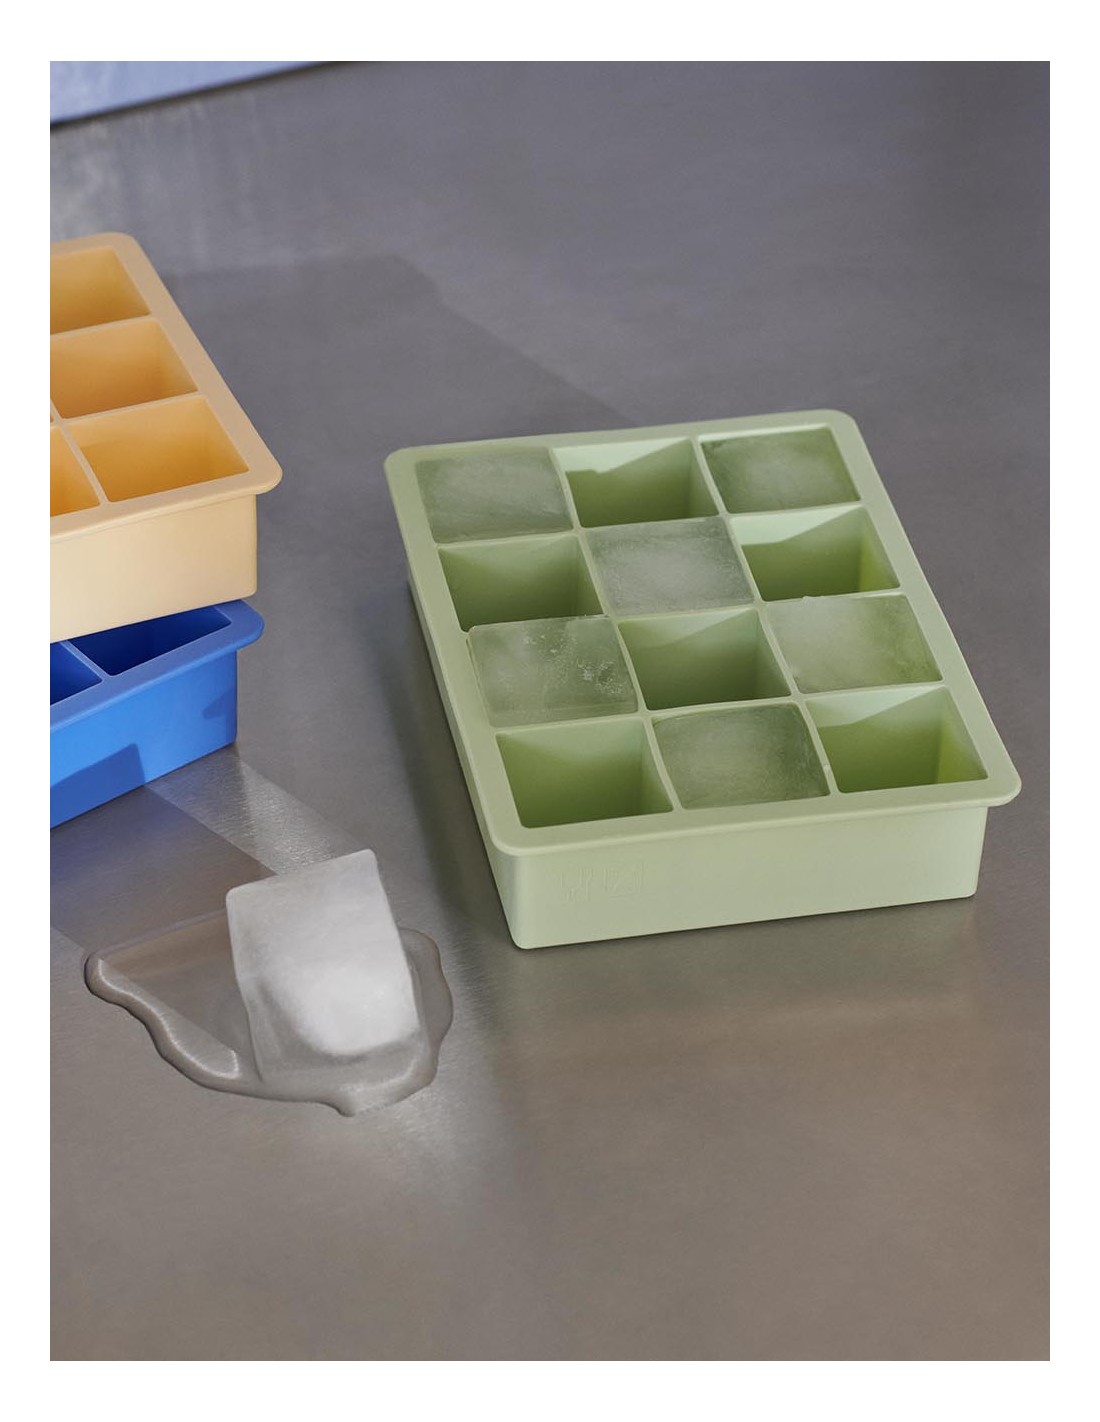 OGGI® Six Cube Ice Tray set of 2, Grey, 1 ct - King Soopers